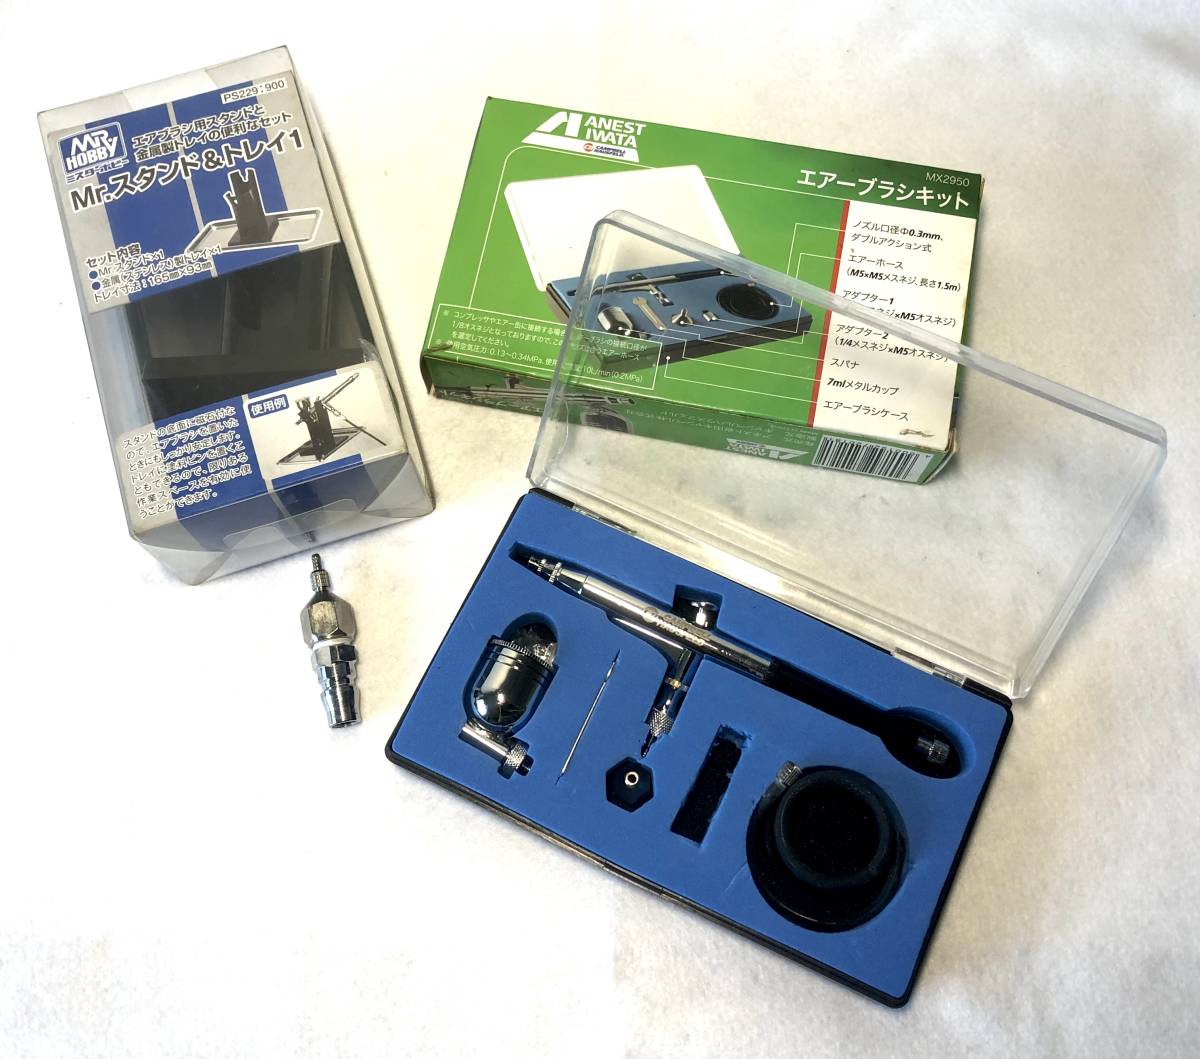 ANEST IWATAane -stroke Iwata airbrush kit MX2950 airbrush kit extra Mr. stand & tray 1 used 